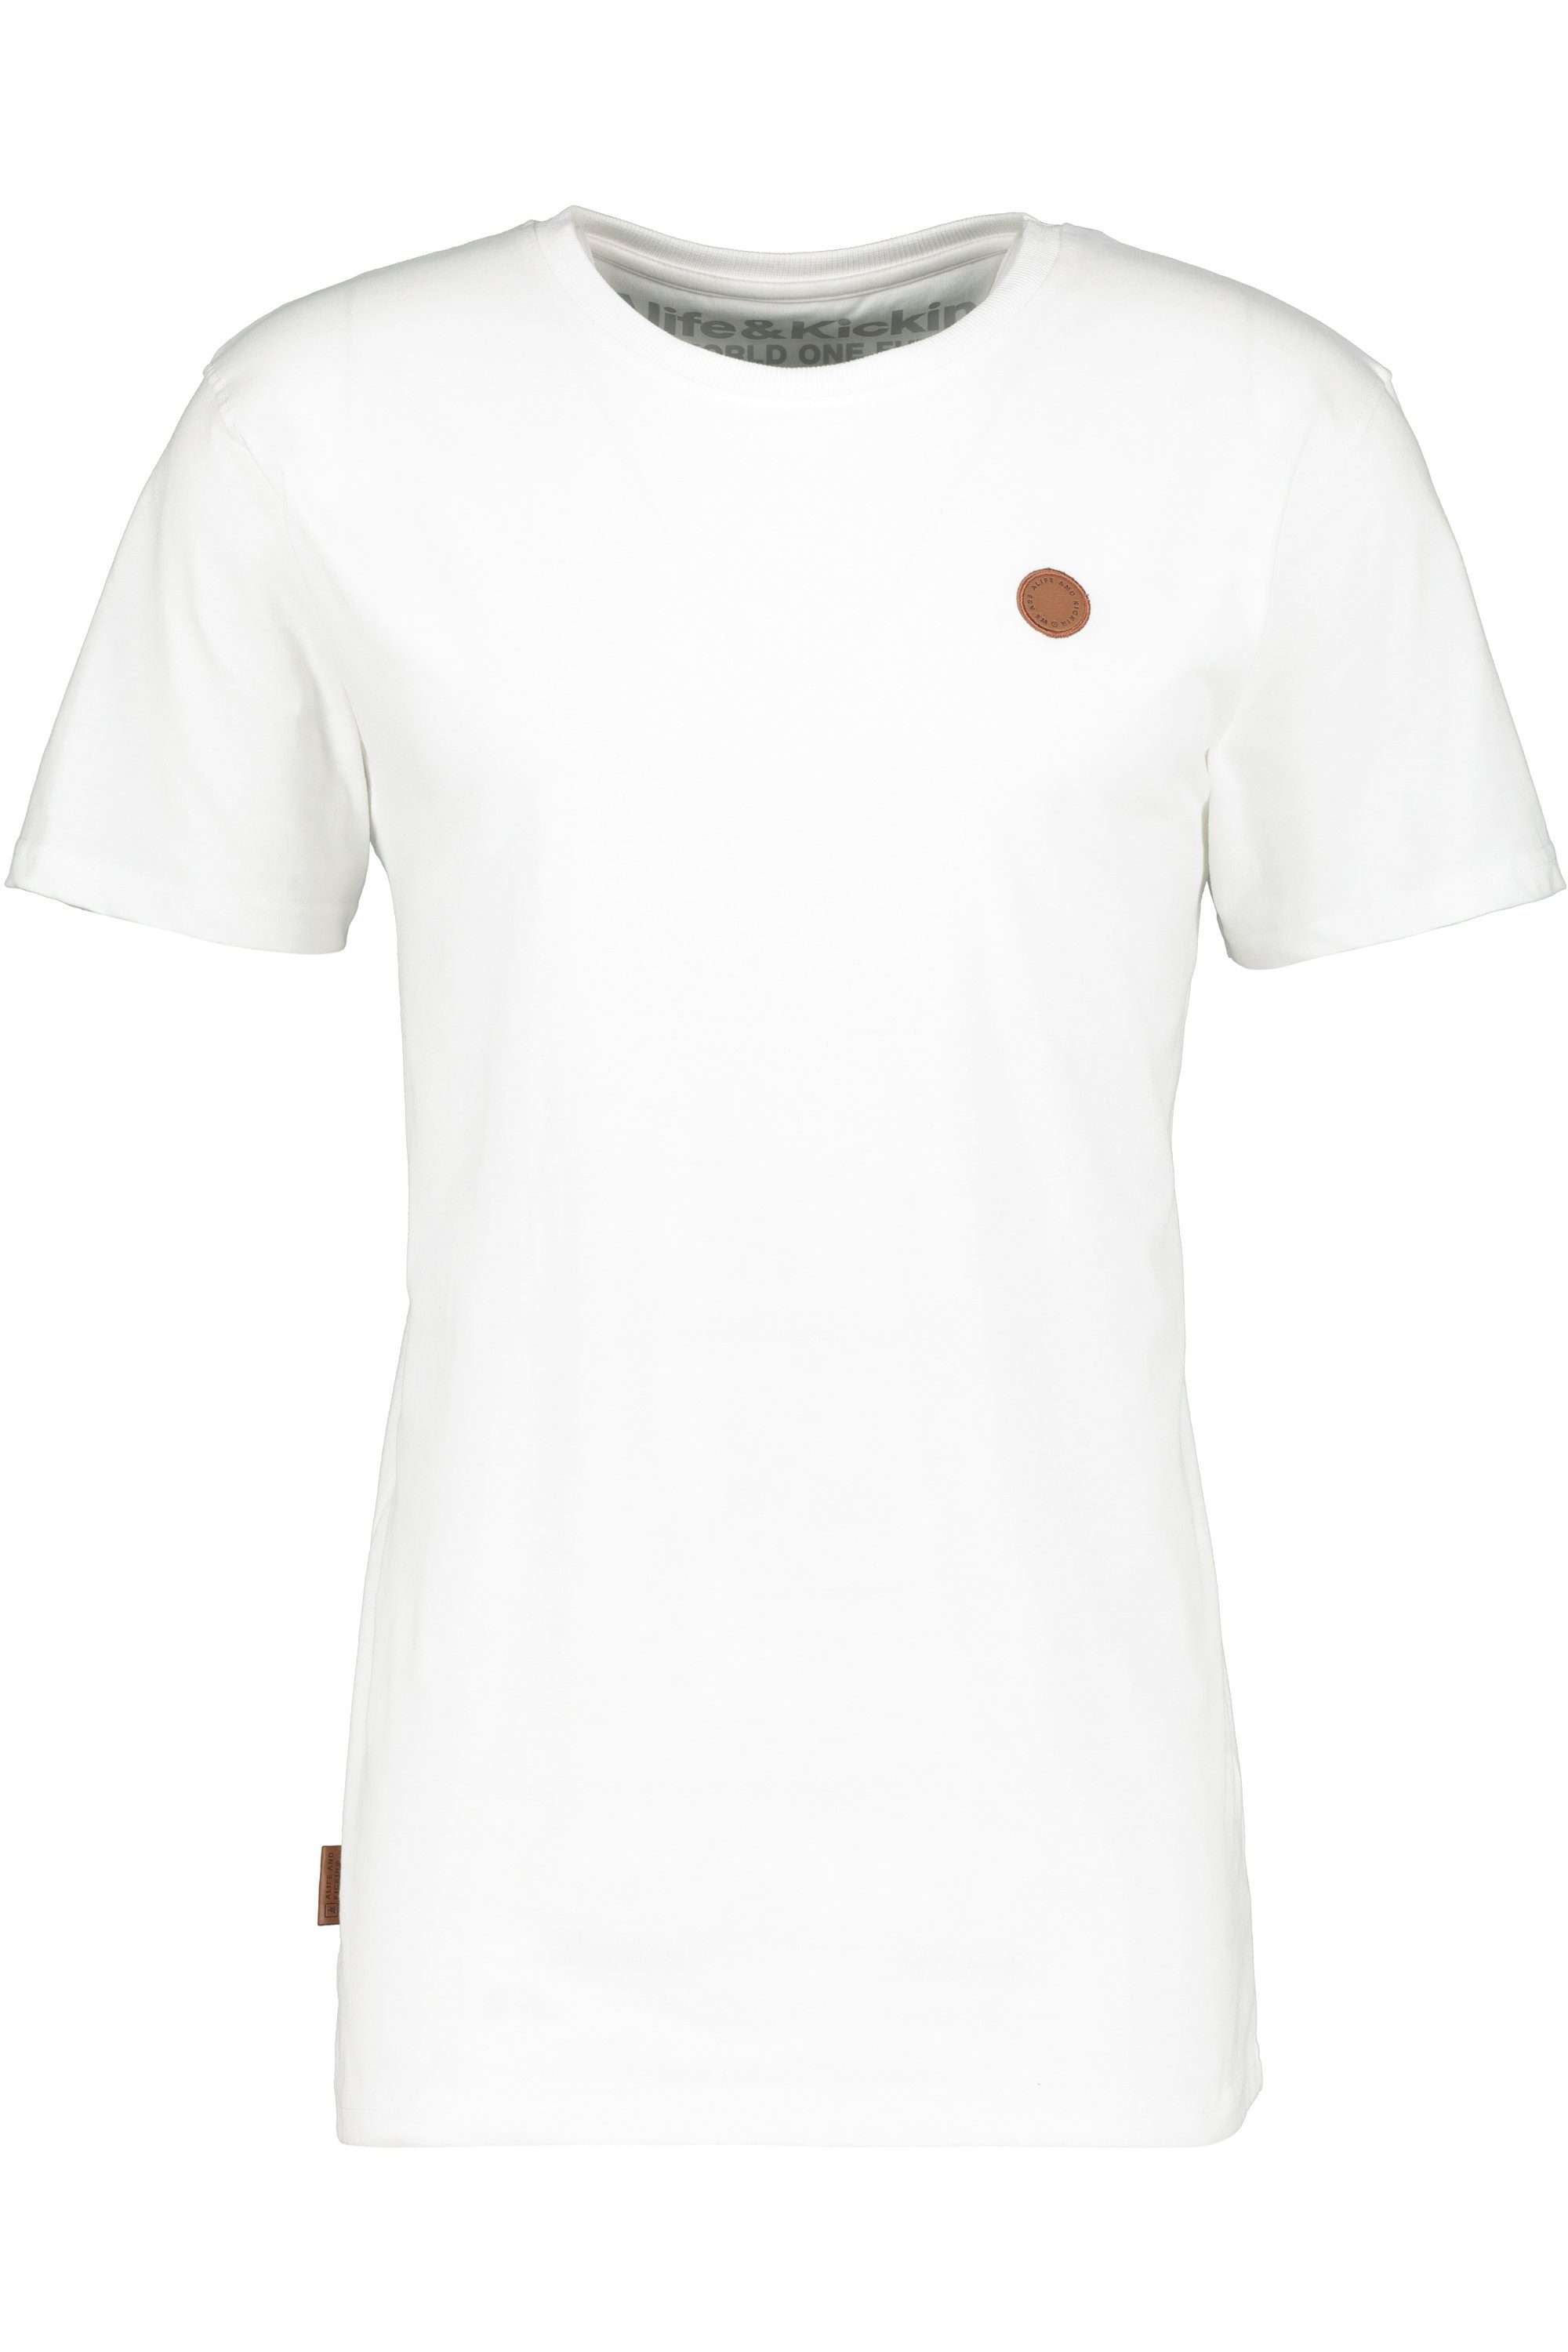 Alife & Kickin T-Shirt MatsAK T-Shirt Herren cloudy